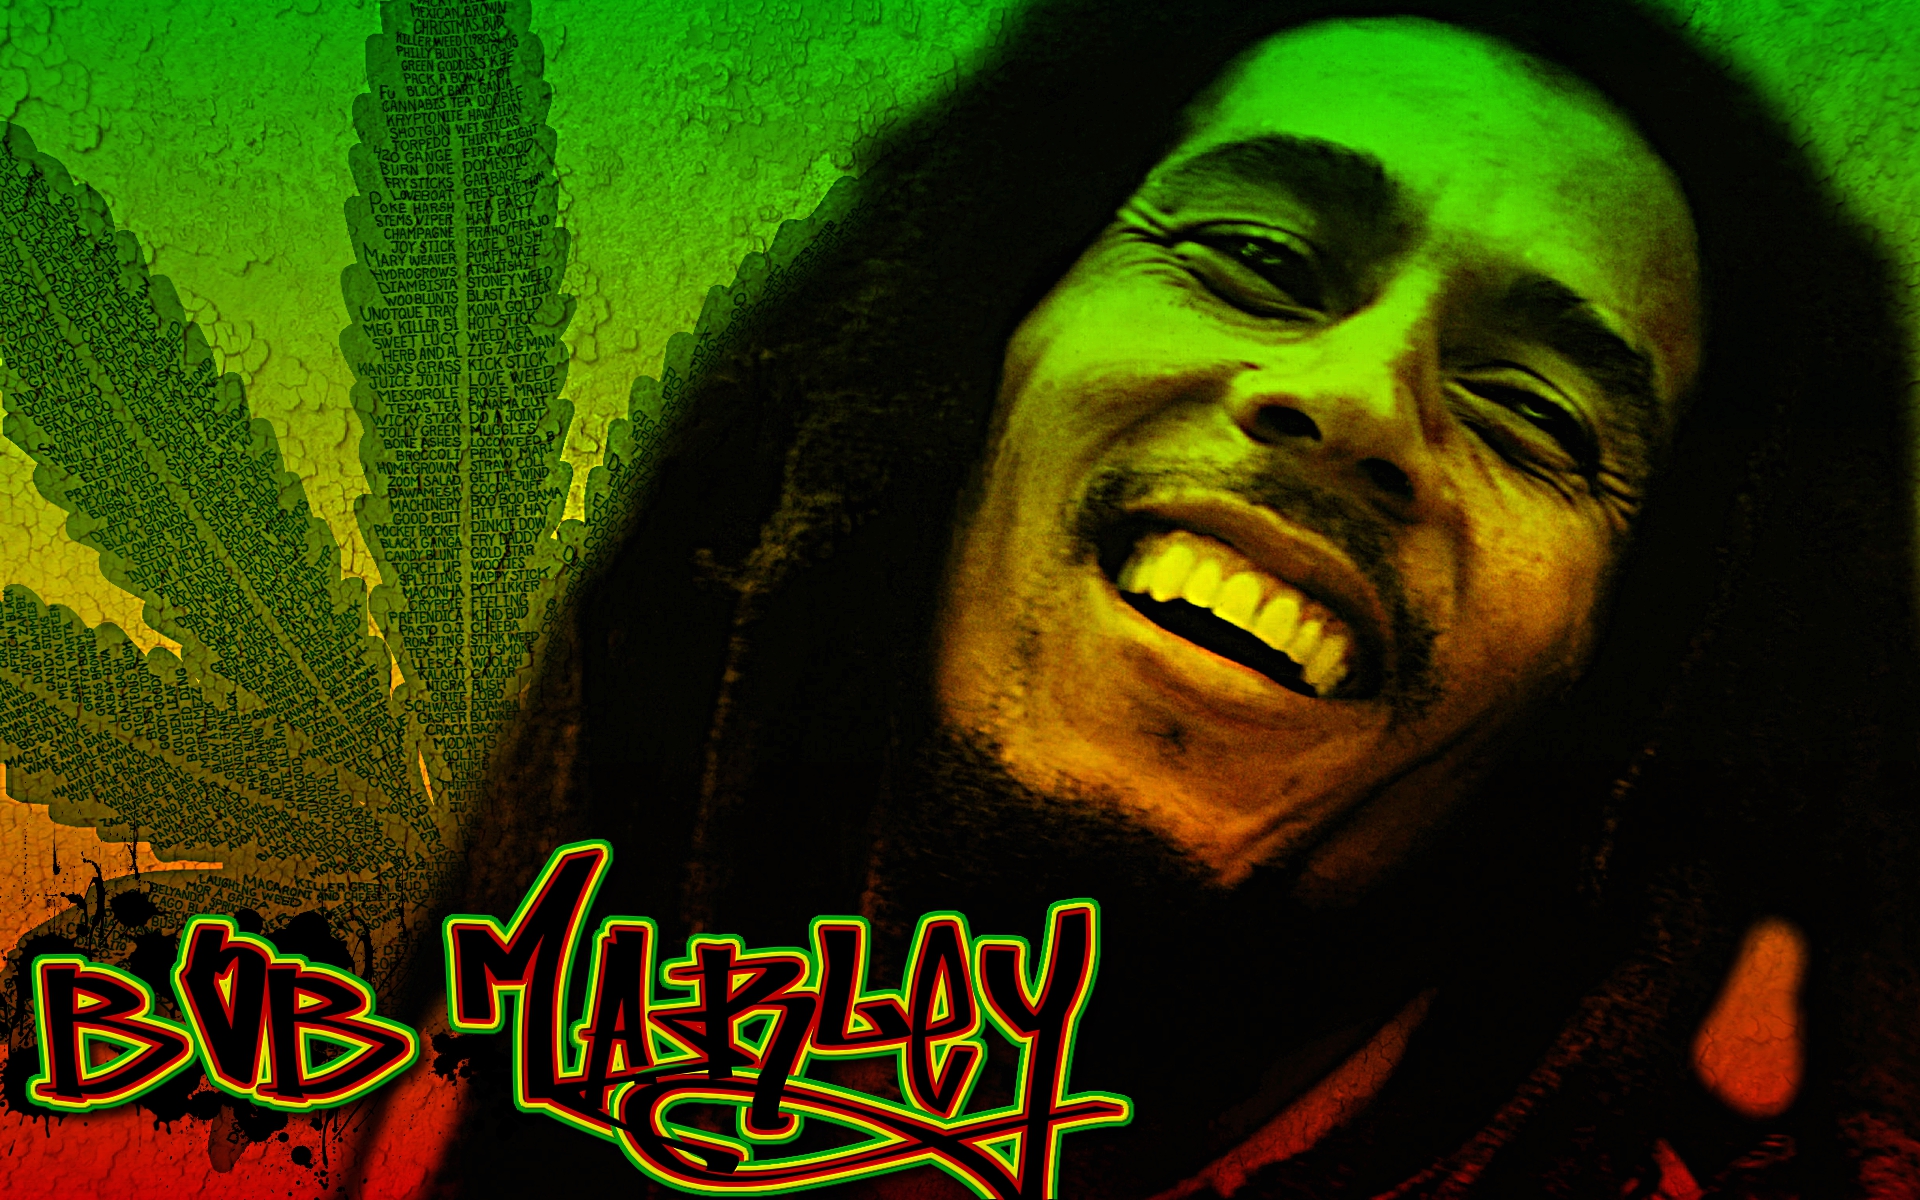 Steelasophical Dj Bob Marley